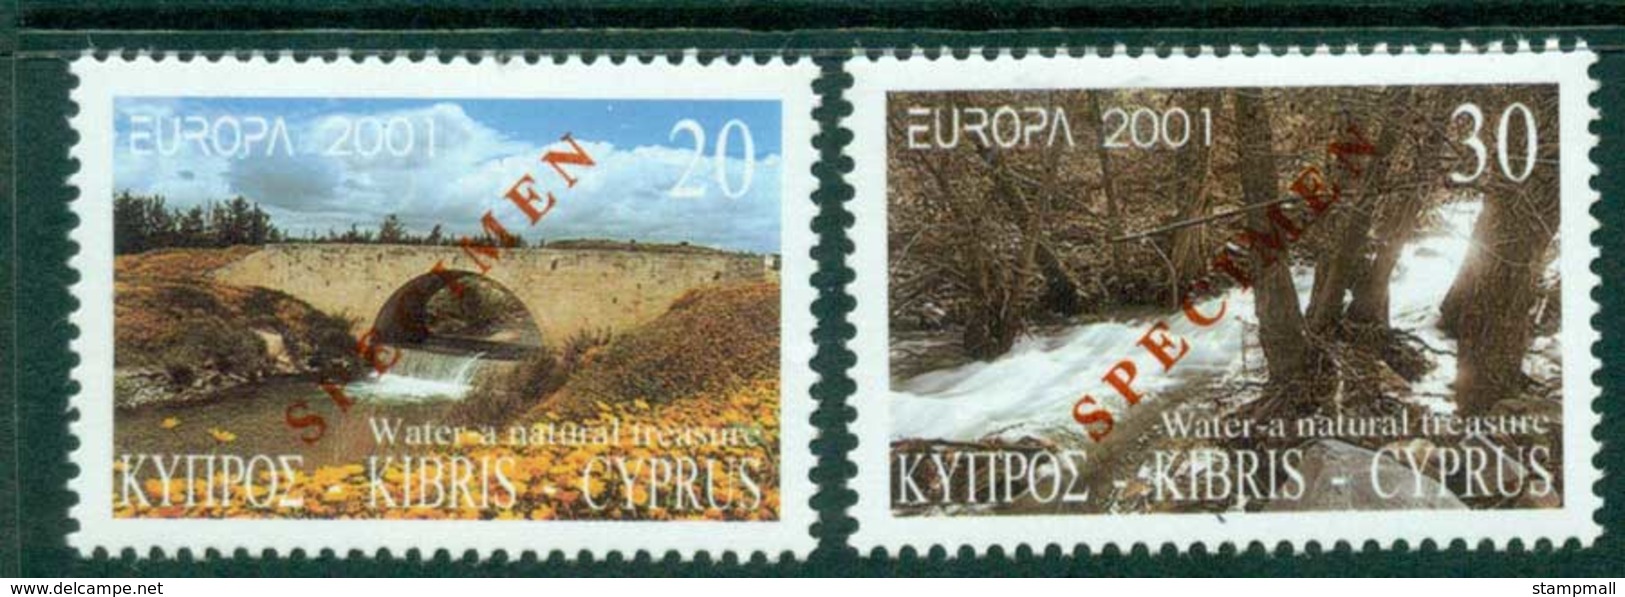 Cyprus 2001 Europa SPECIMEN MUH Lot23538 - Unused Stamps